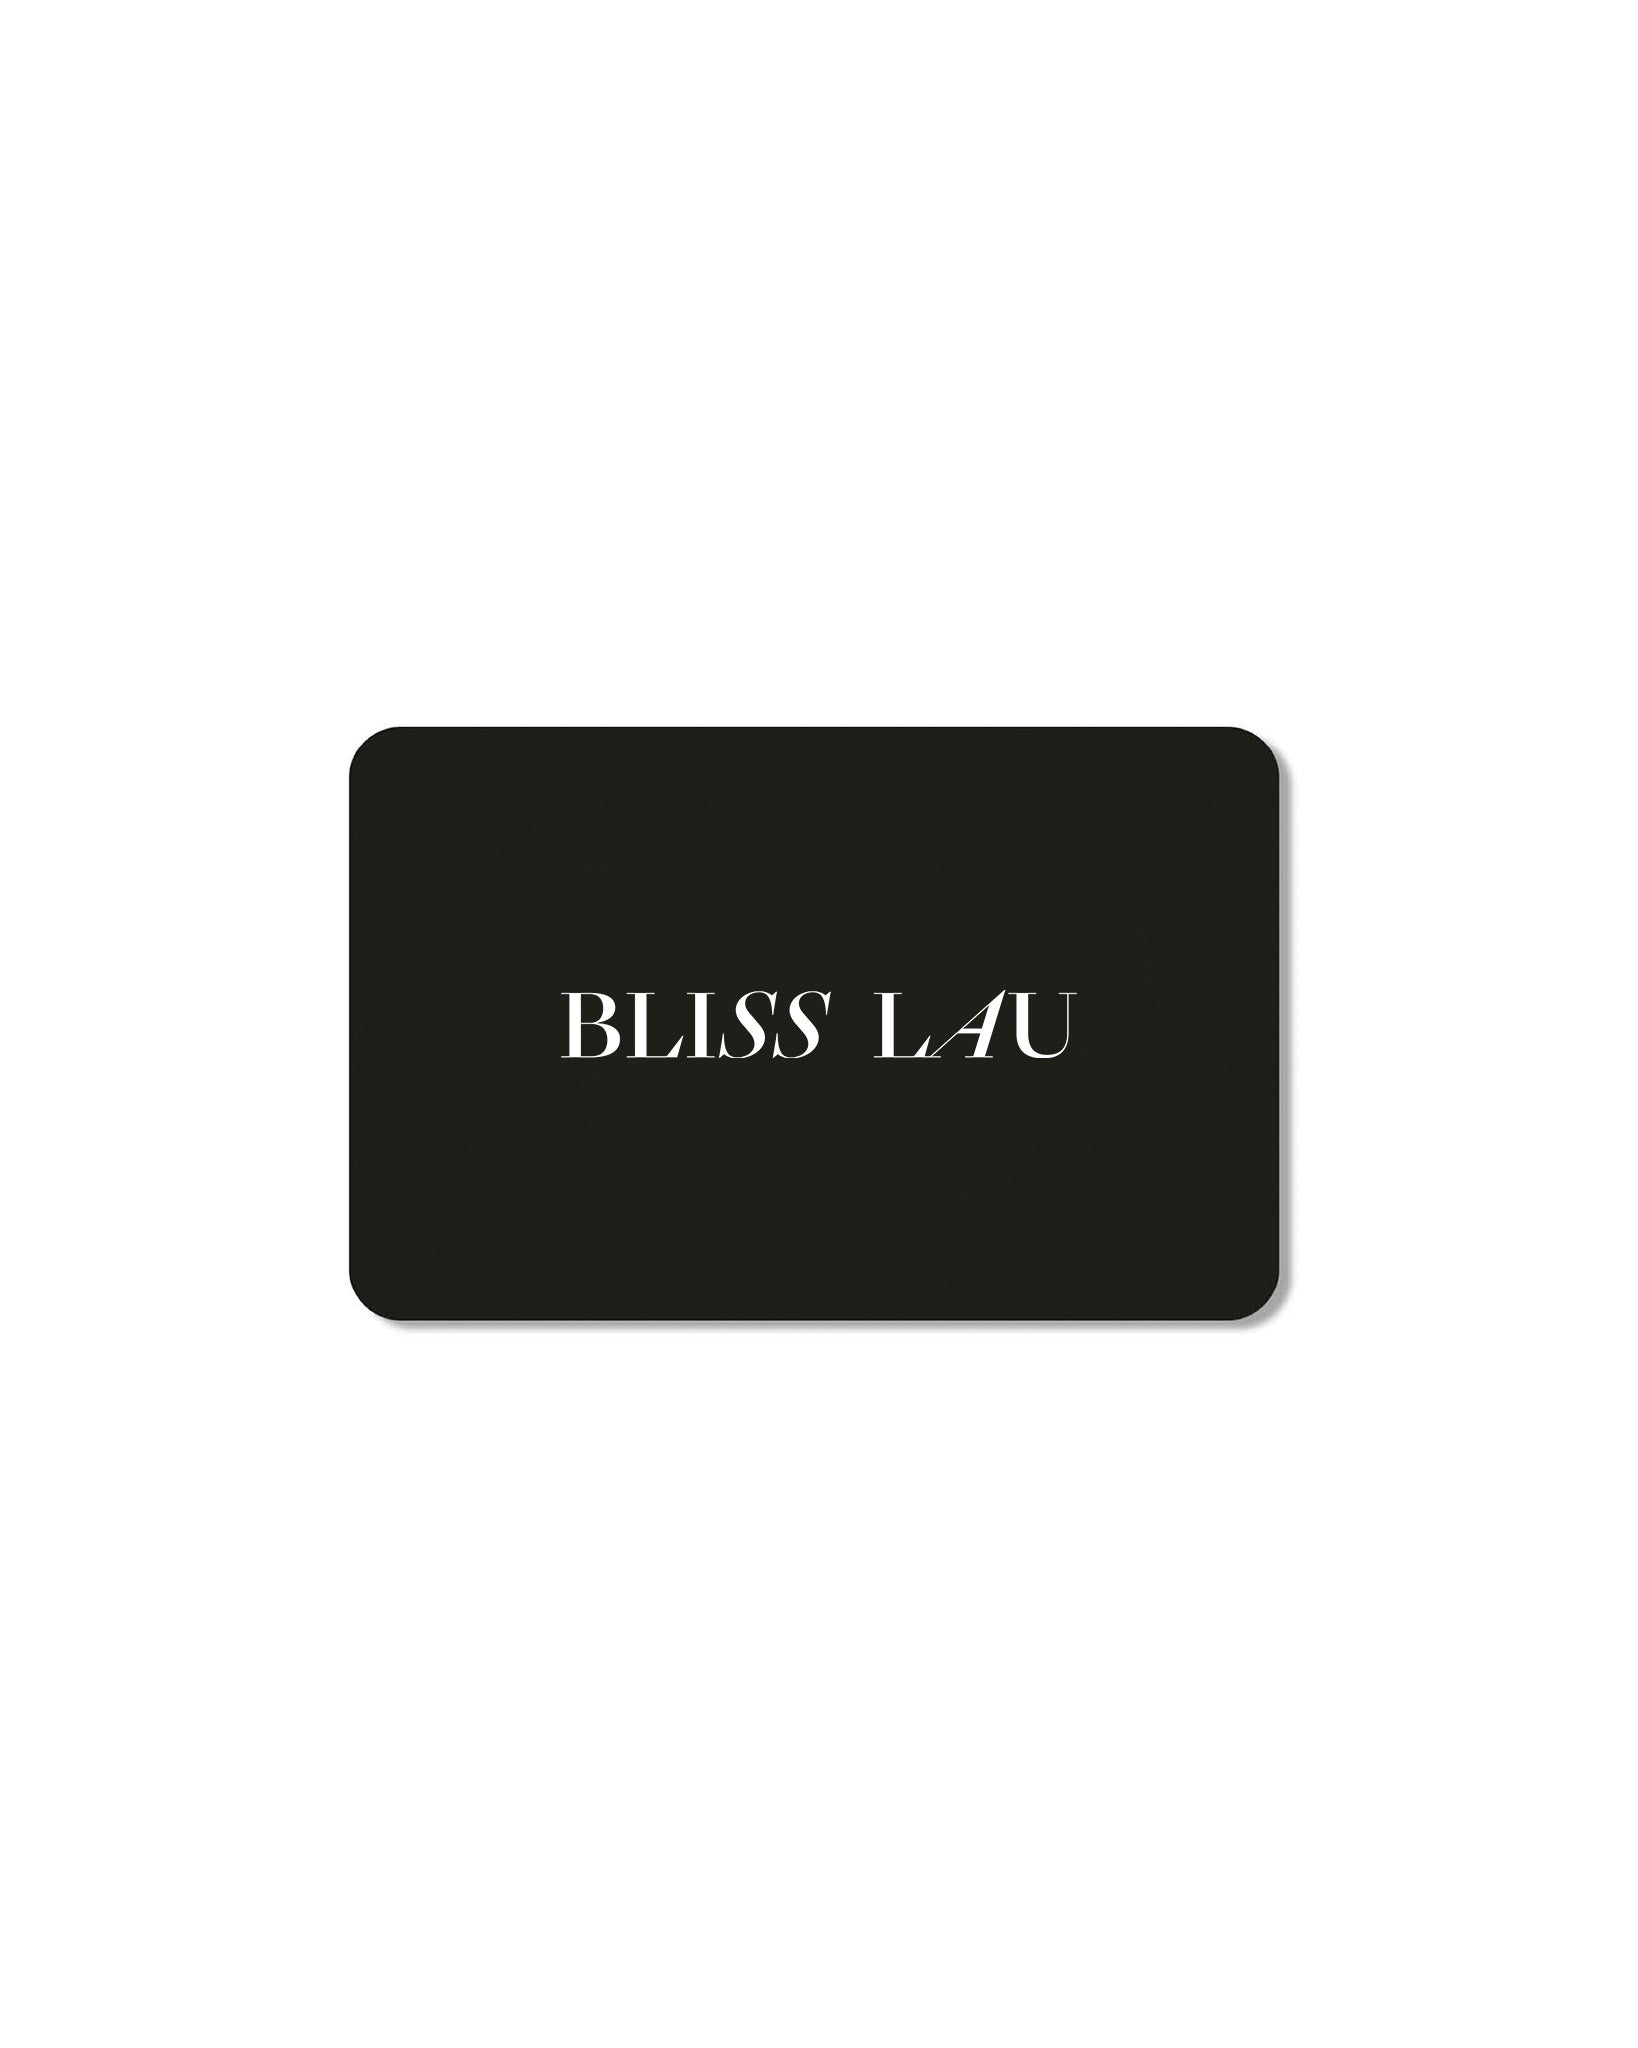 Bliss Lau Gift Card